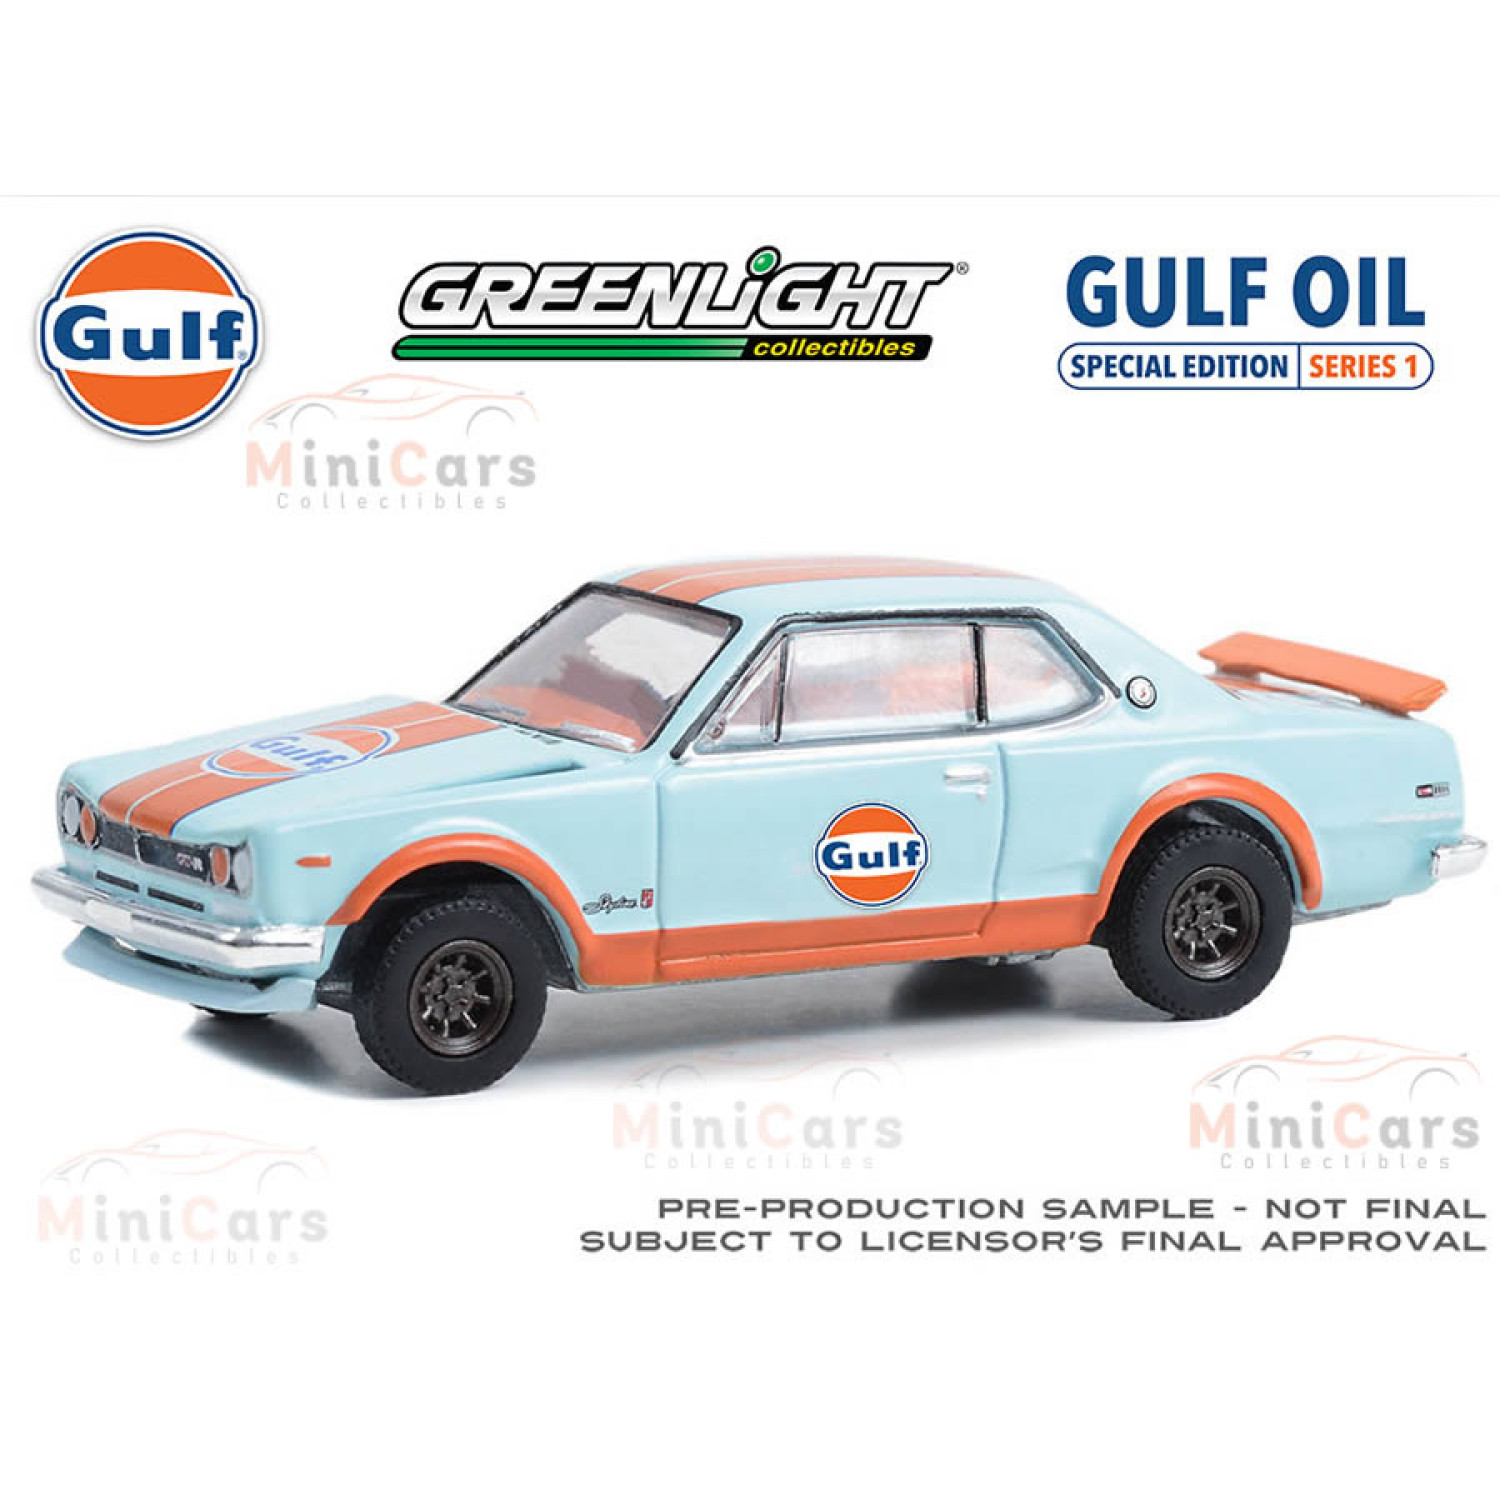 1971 Nissan Skyline GT-R Gulf Oil